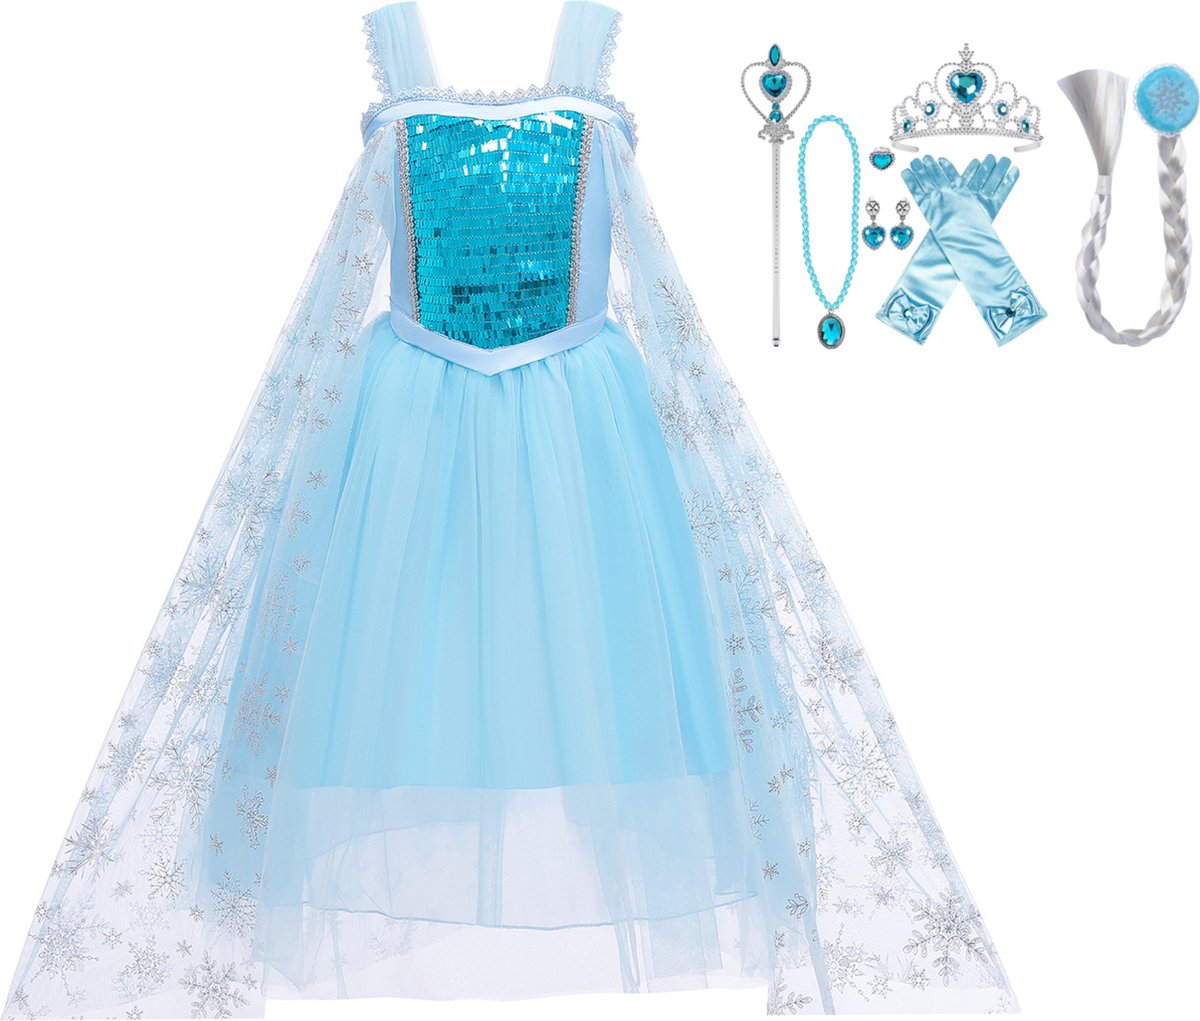 Joya Kids® Blauwe Prinsessenjurk meisje | Luxe Verkleedjurk + Accessoires set | Verkleedkleding | Prinsessen speelgoed | Carnaval | Cadeau Meisje Sinterklaas | Maat 134-140 (140)